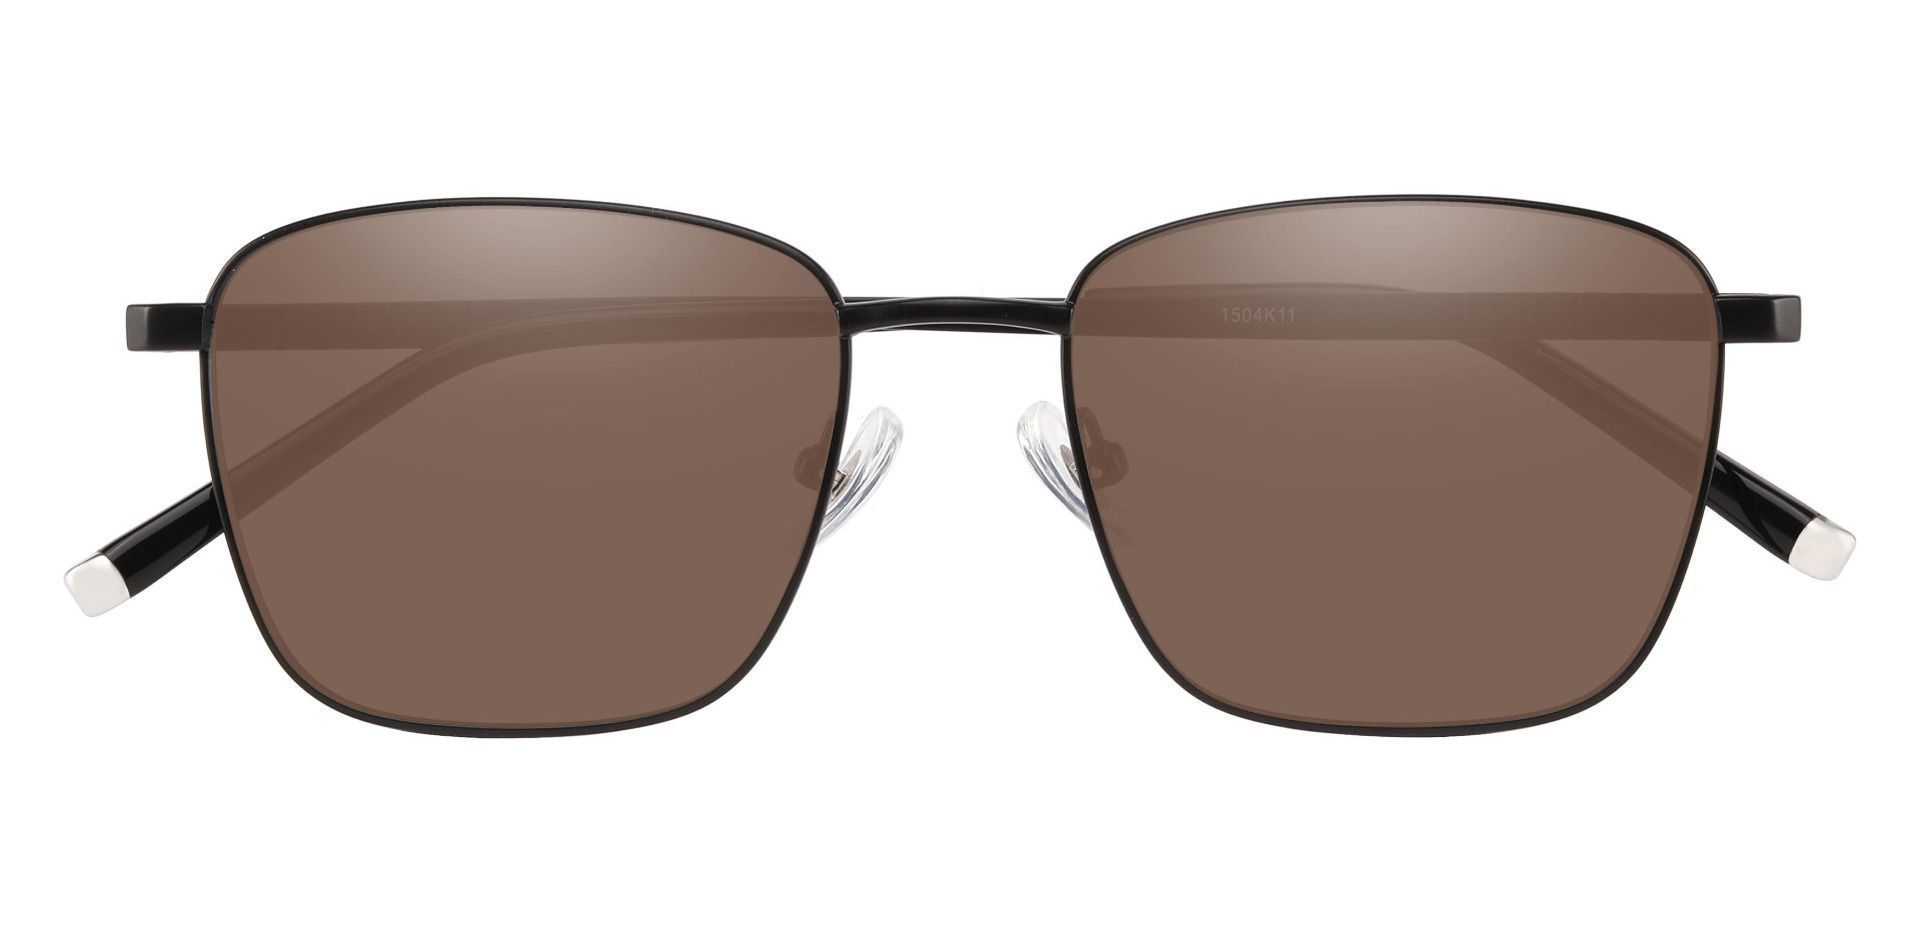 May Square Progressive Sunglasses - Black Frame With Brown Lenses